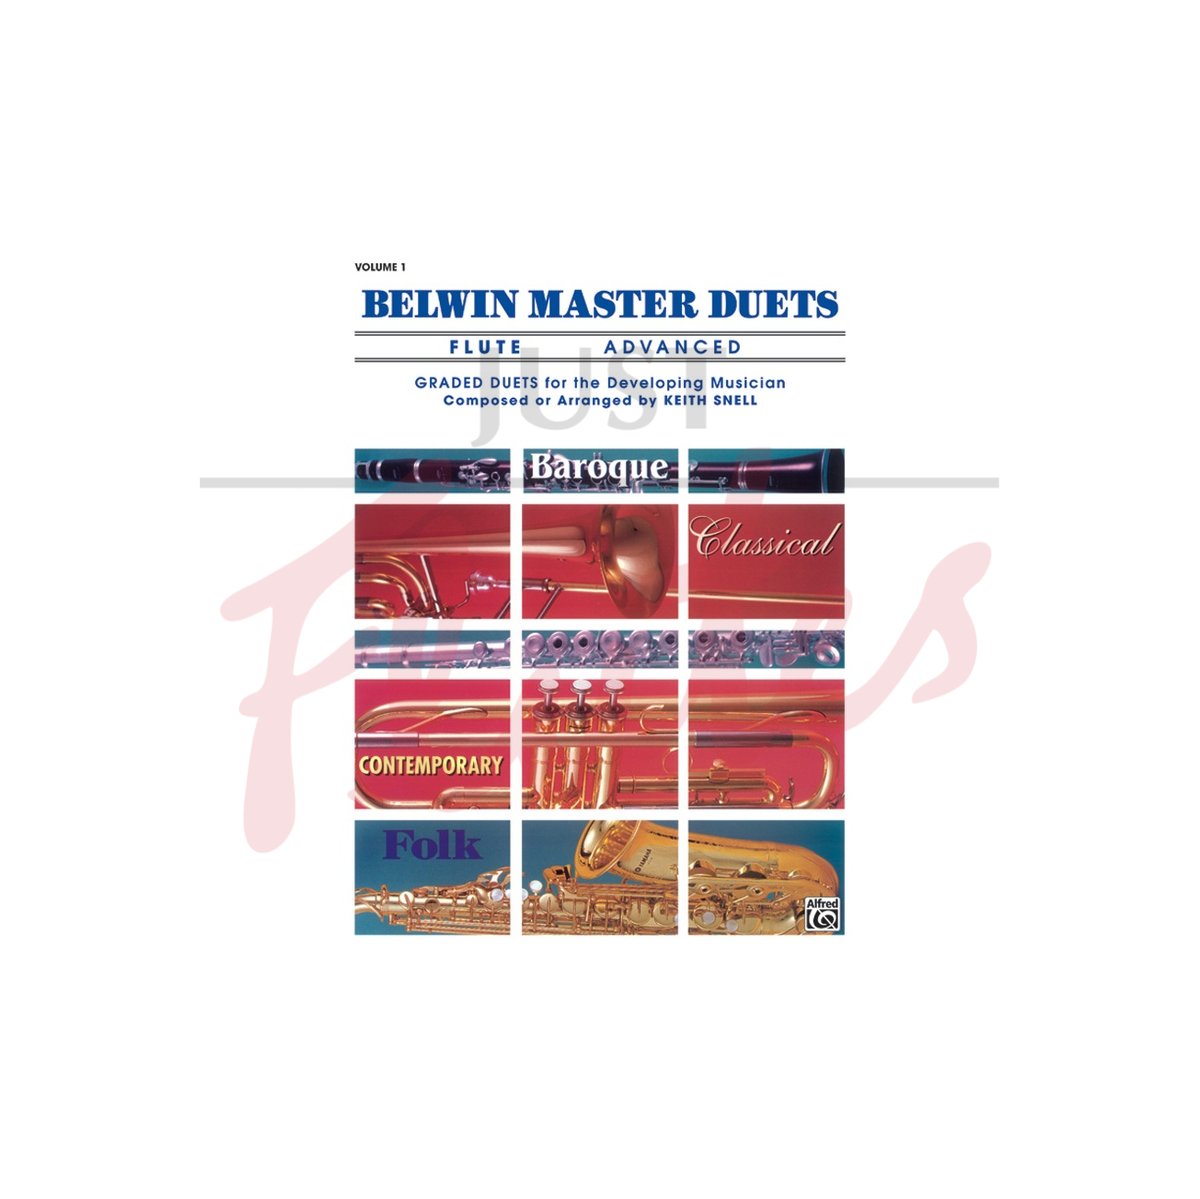 Belwin Master Duets, Vol 1, Advanced [Flute]